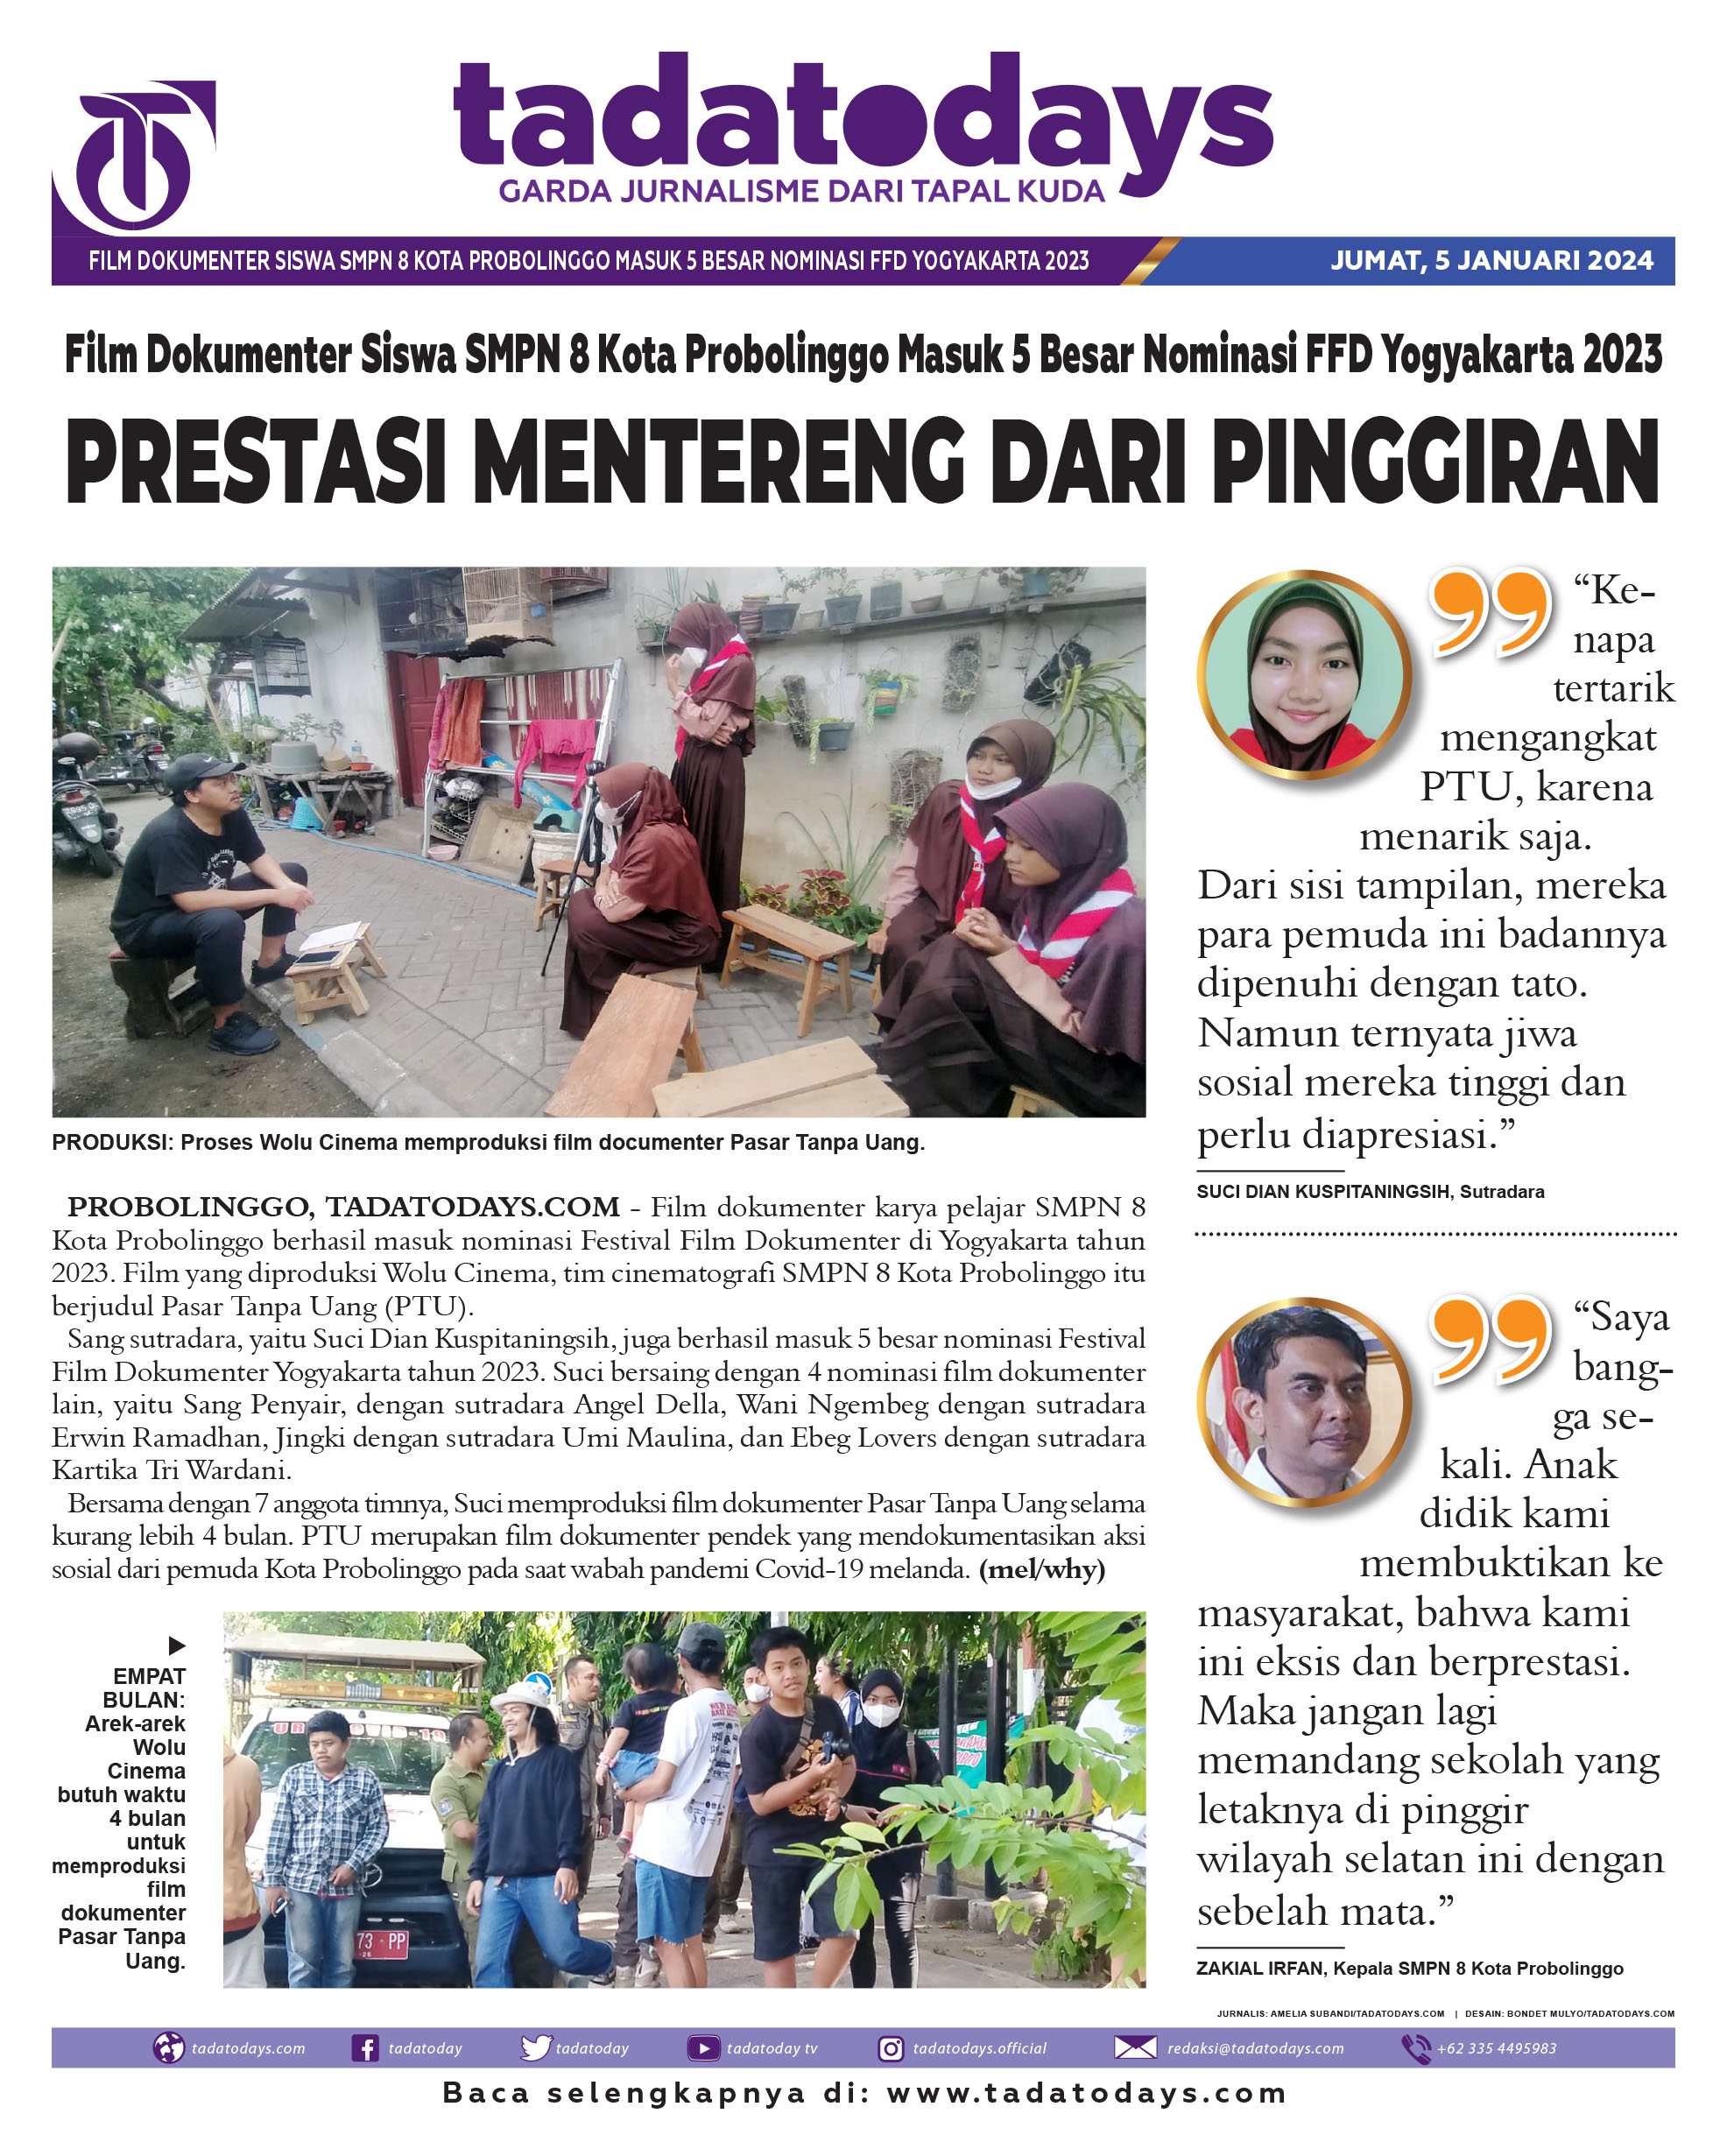 Film Dokumenter Siswa SMPN 8 Kota Probolinggo Masuk 5 Besar FFD Yogyakarta 2023